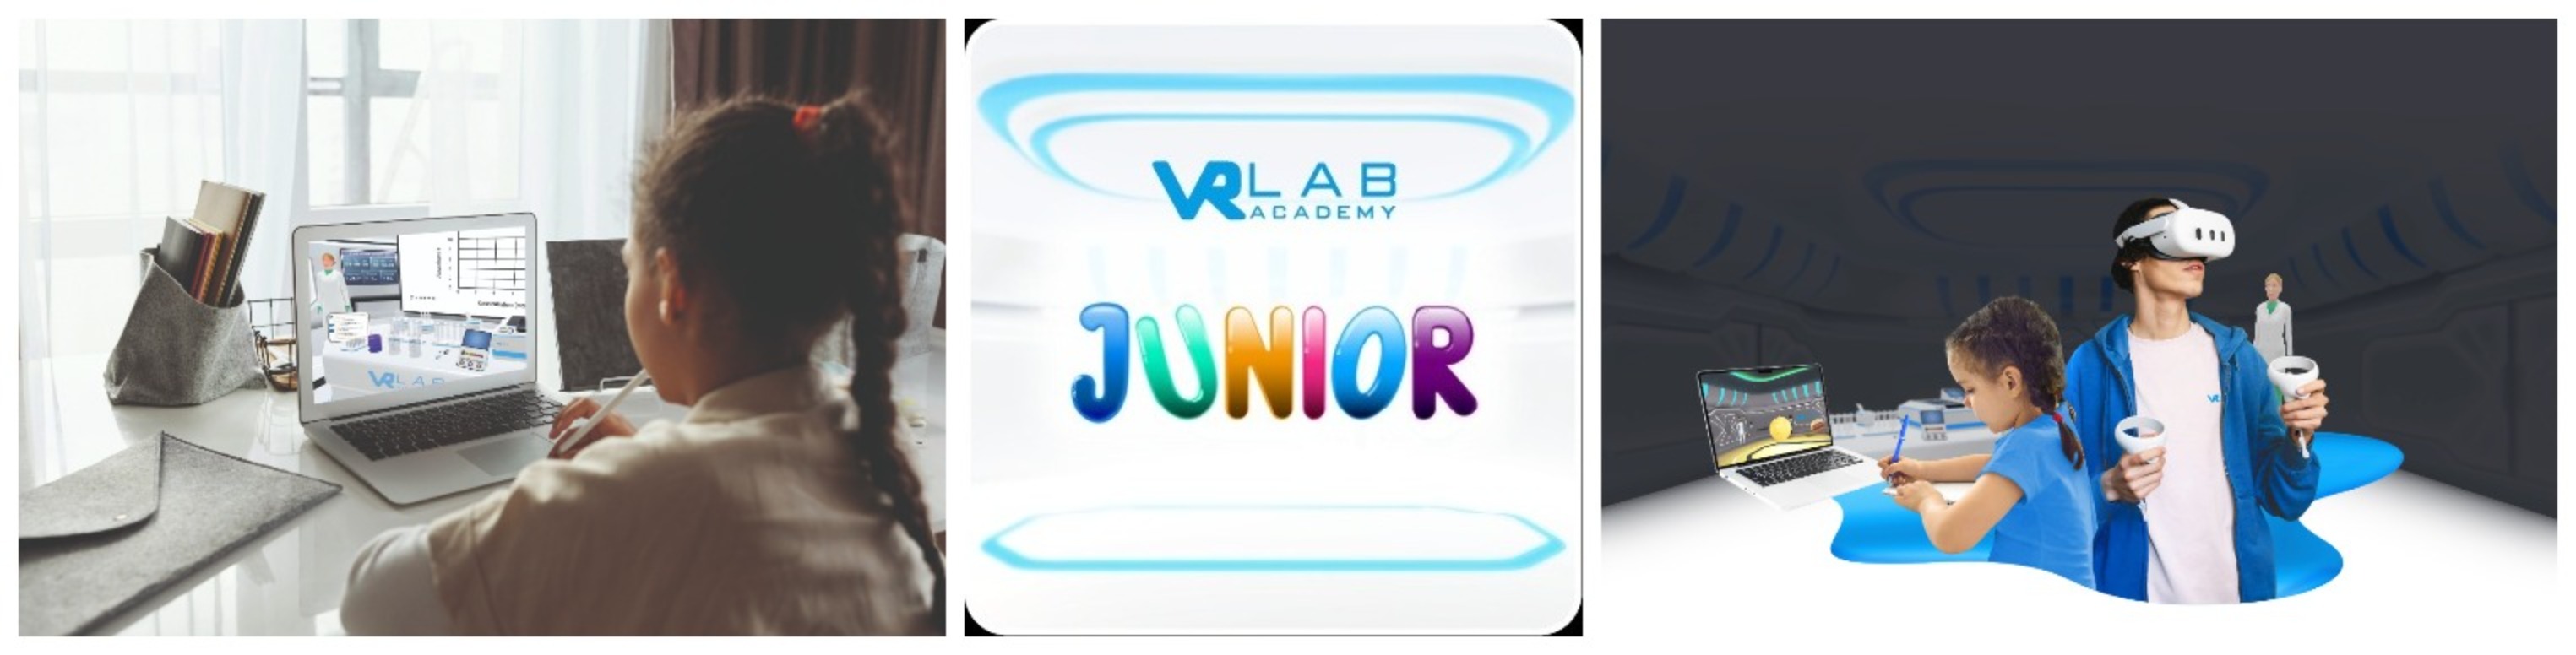 VRLab academy jr c1